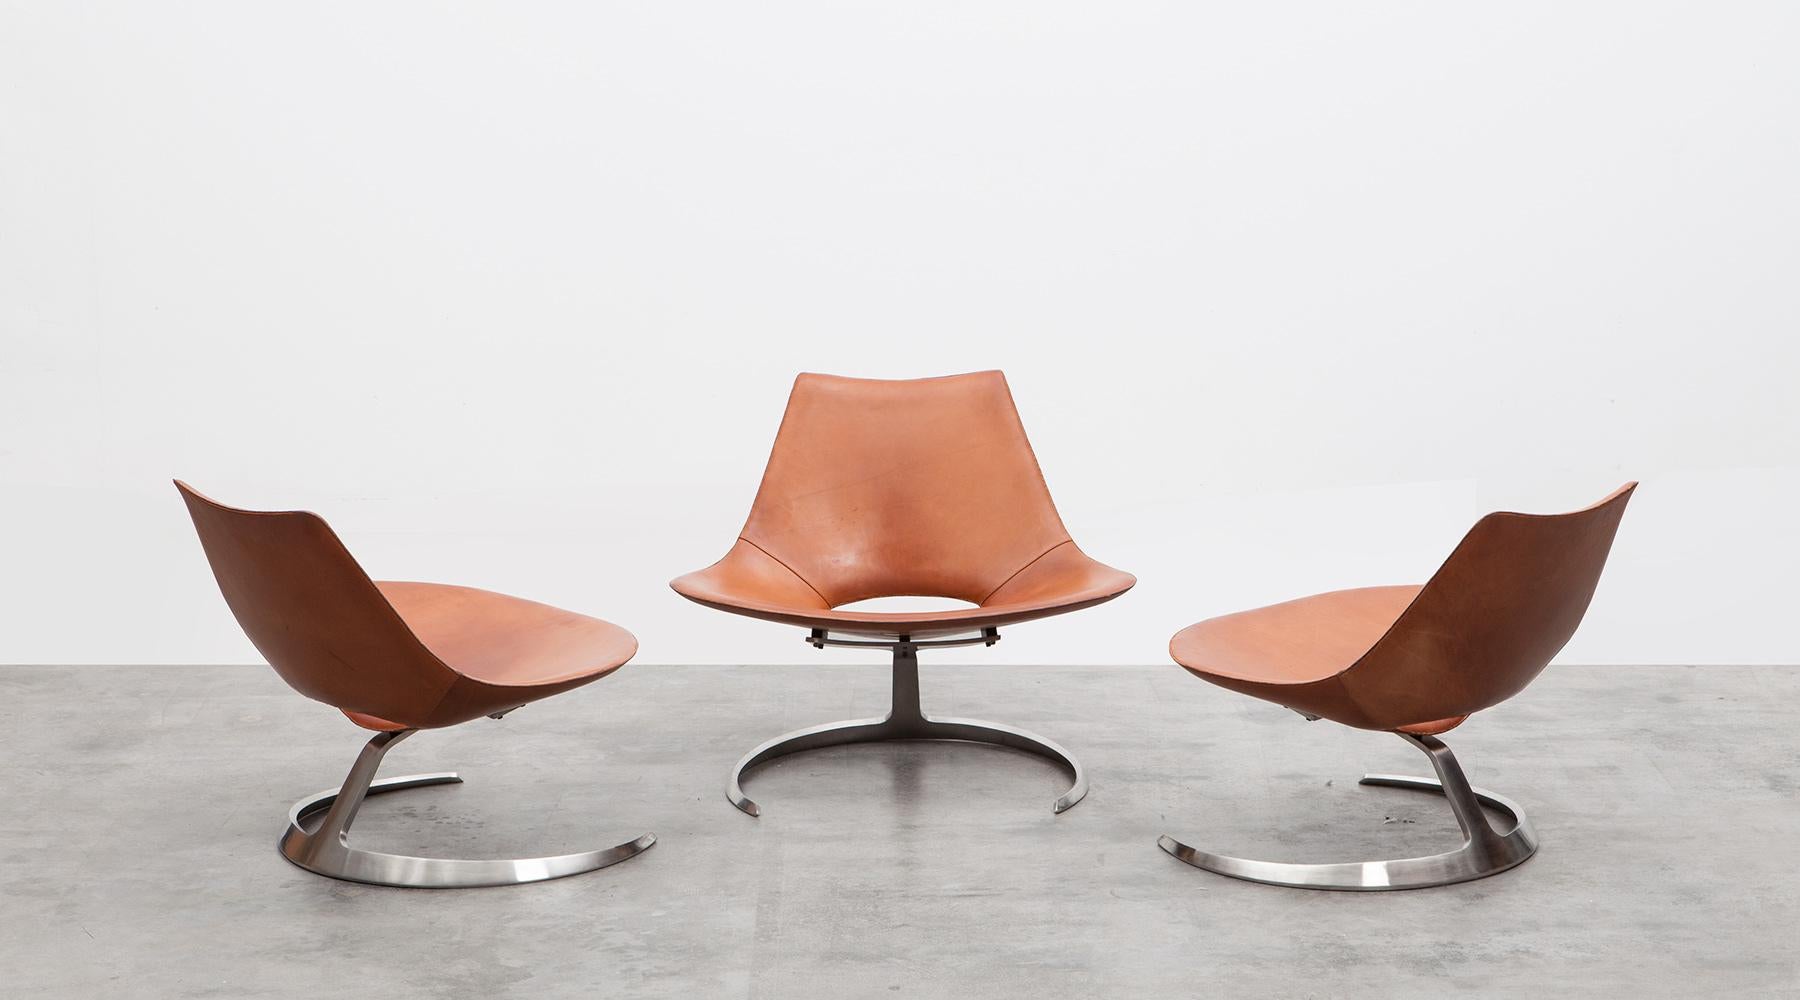 Steel 1960s Brown Leather Scimitar Chair by Fabricius / Kastholm 'C'